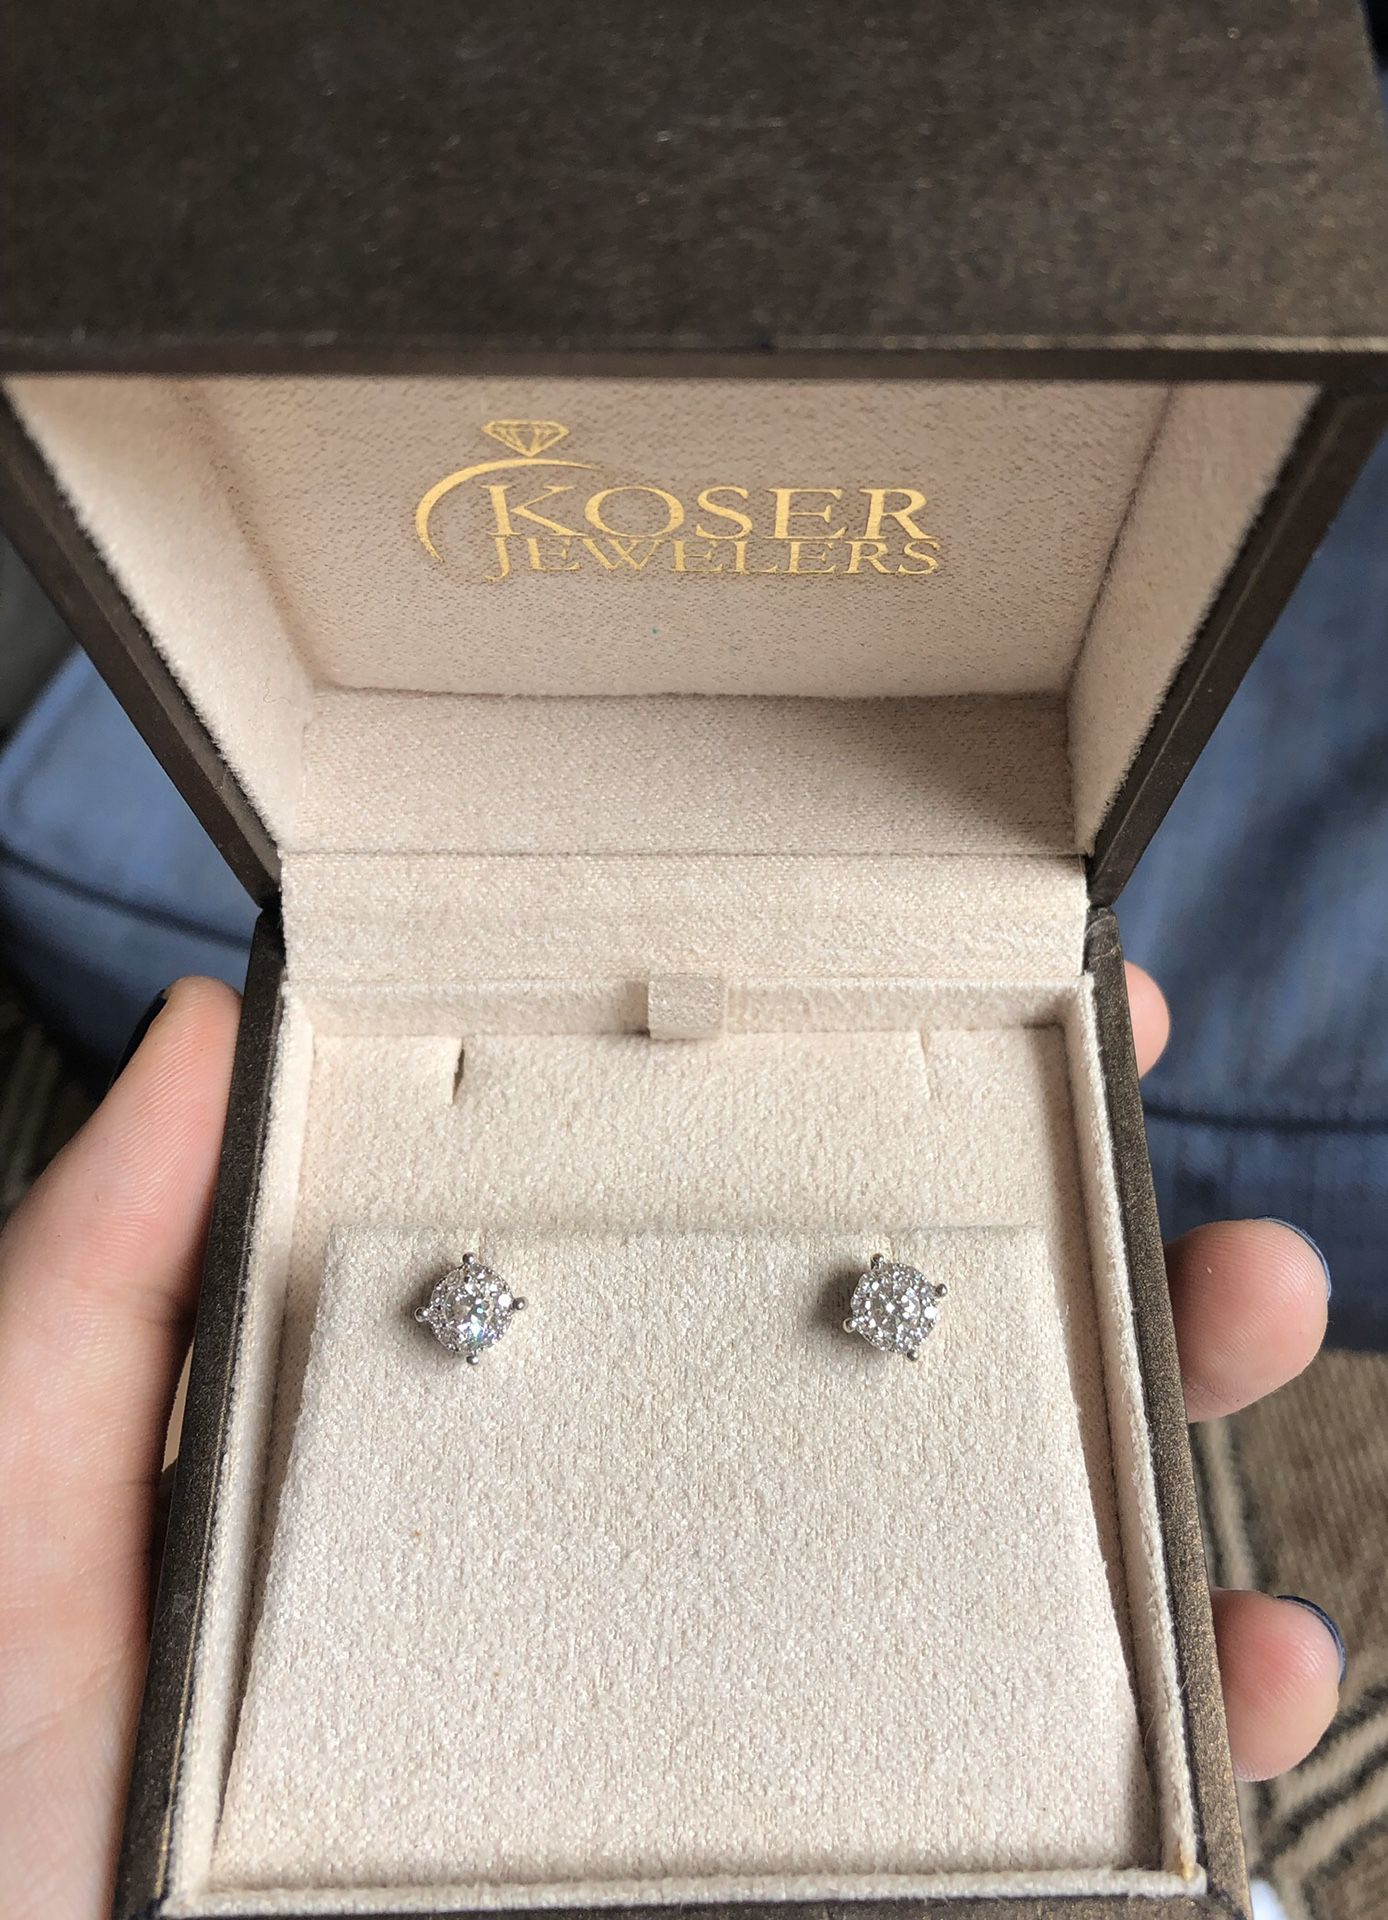 .75 Carat Diamond Cluster Stud Earrings